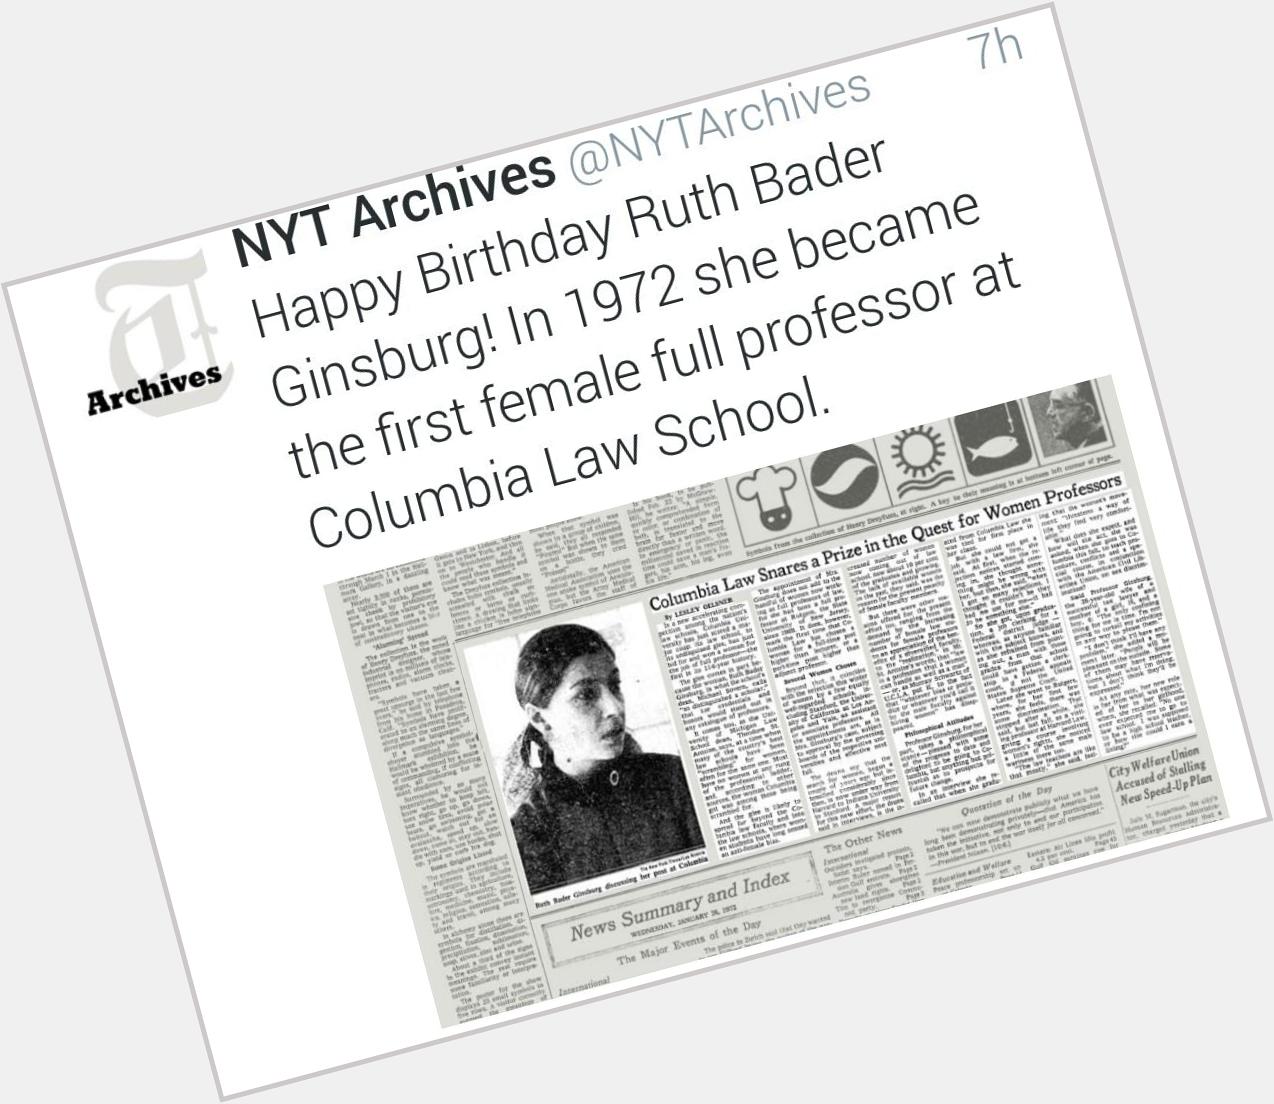 Happy birthday to Ruth Bader Ginsburg!  